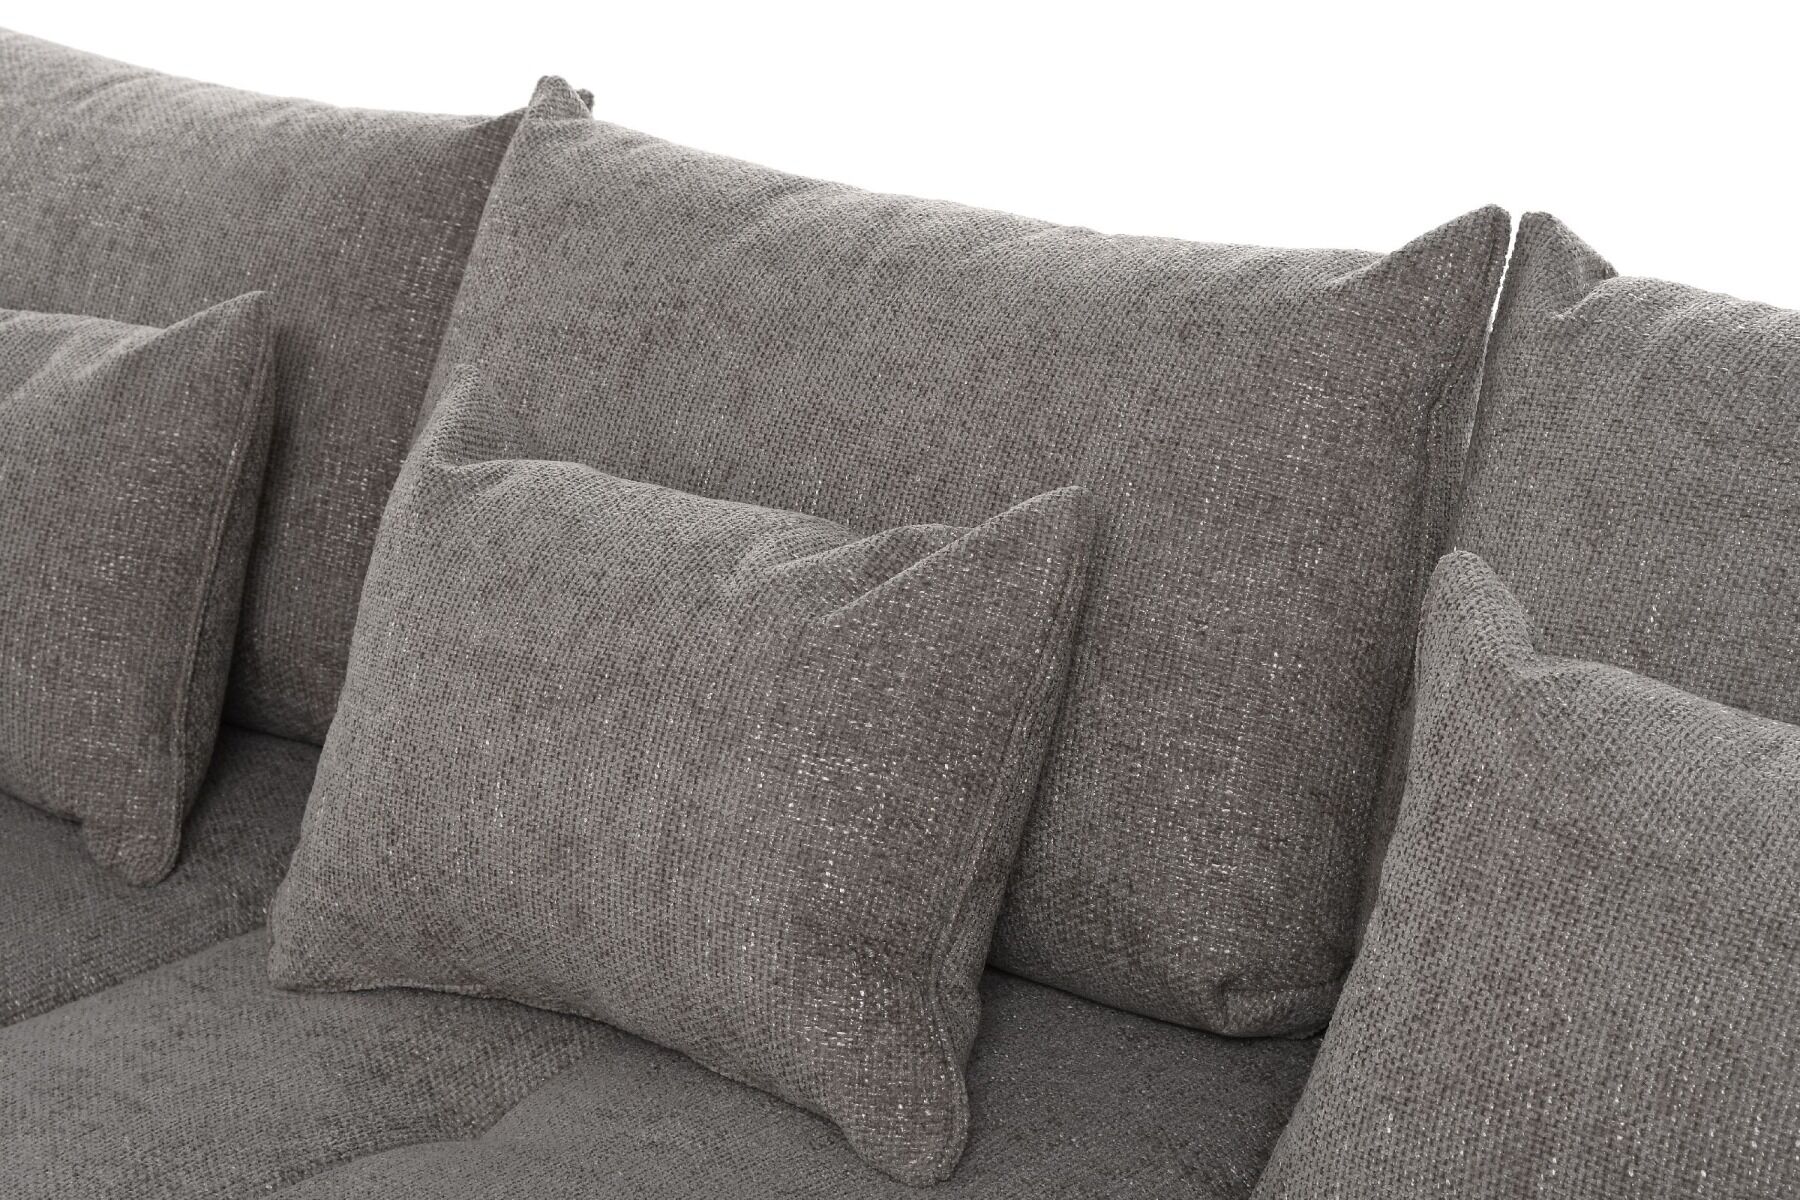 Sofa narożna Shaldon lewa 297x229x86cm